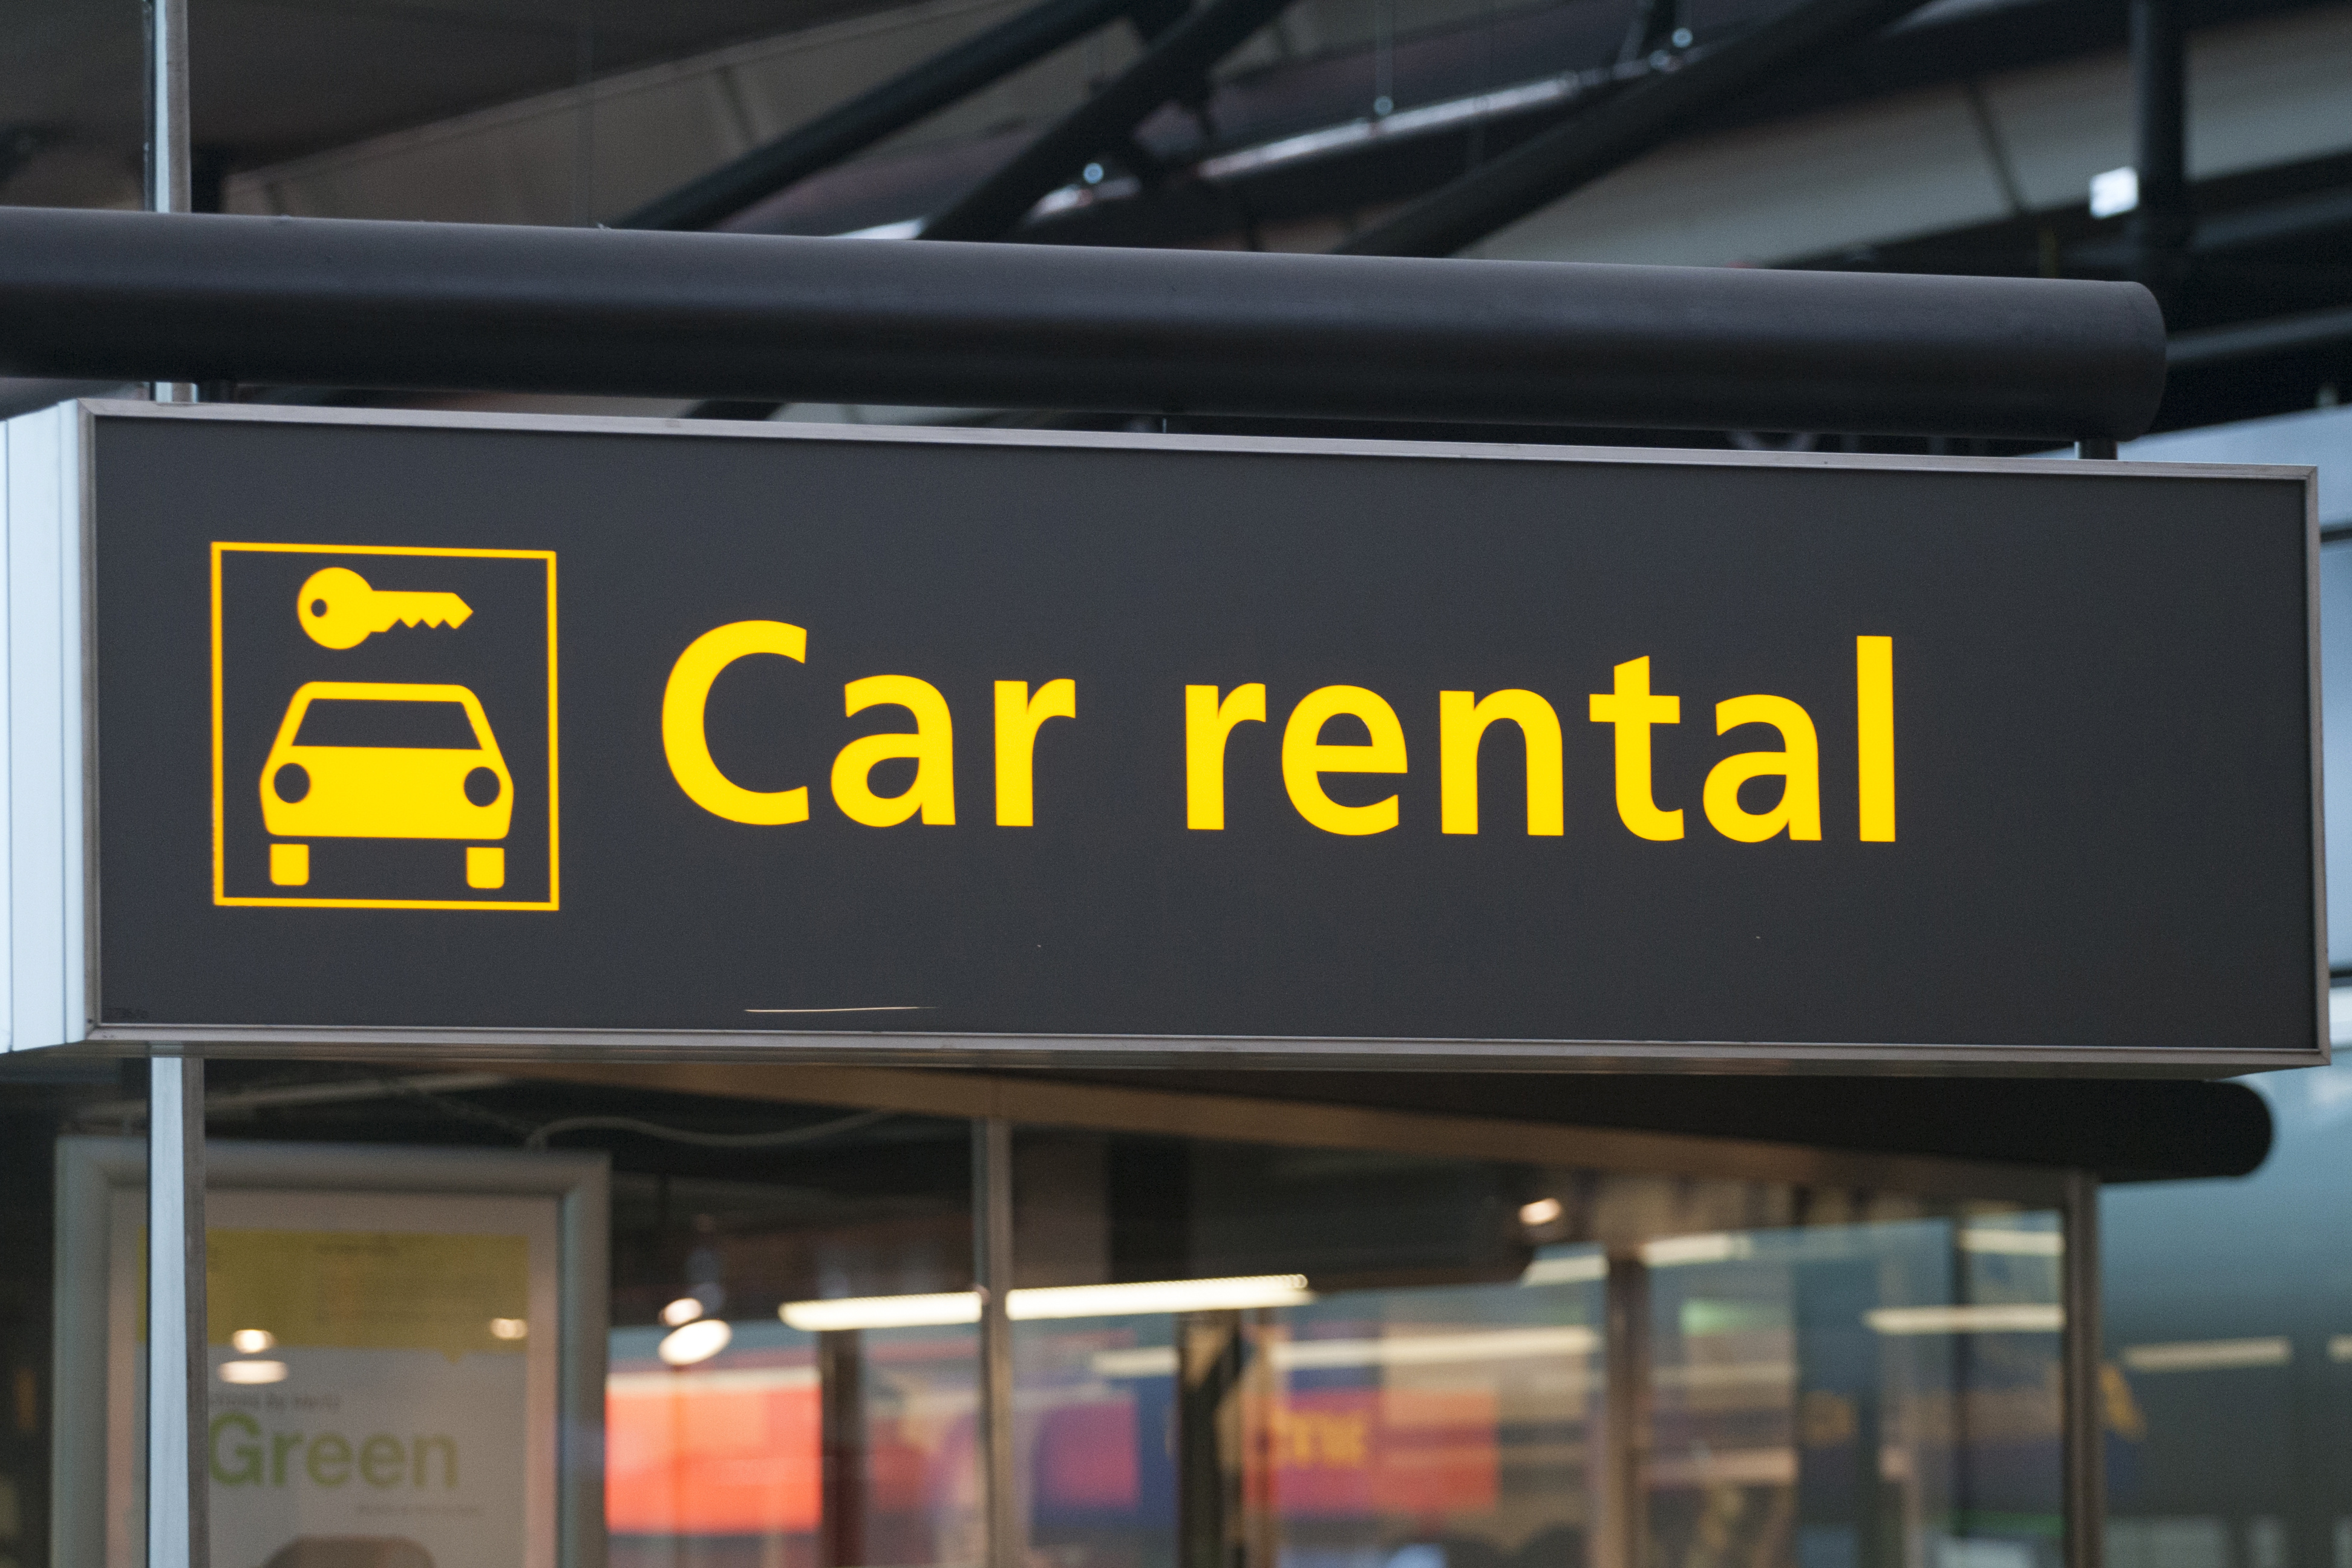 Key car rental jargon you must know